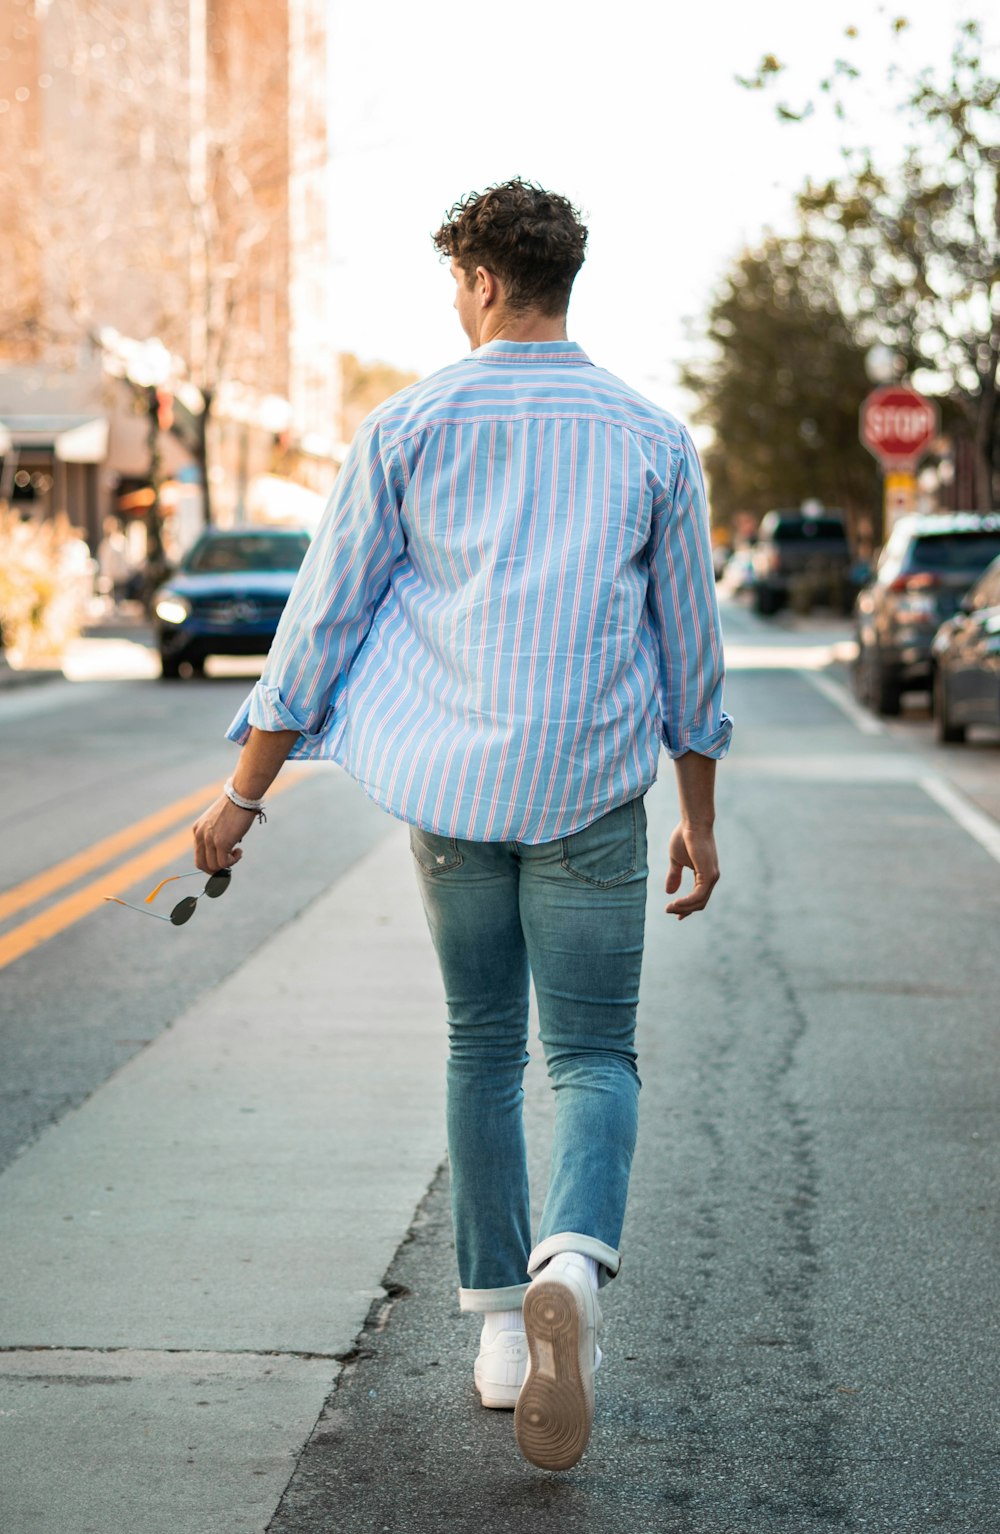 Man in blue dress shirt and blue denim jeans walking on street during  daytime photo – Free Apparel Image on Unsplash